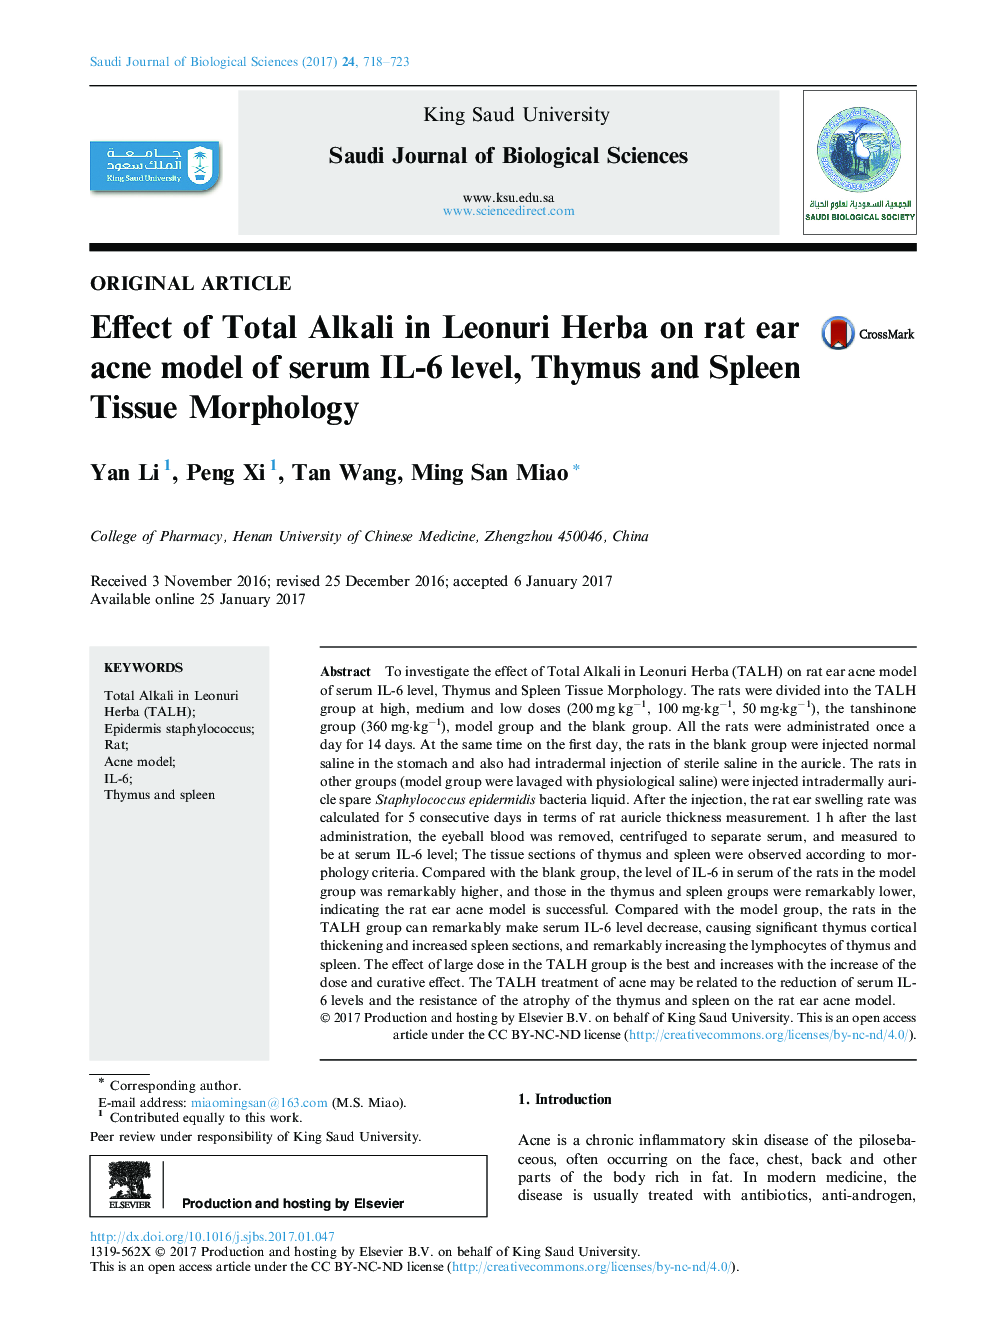 Original articleEffect of Total Alkali in Leonuri Herba on rat ear acne model of serum IL-6 level, Thymus and Spleen Tissue Morphology